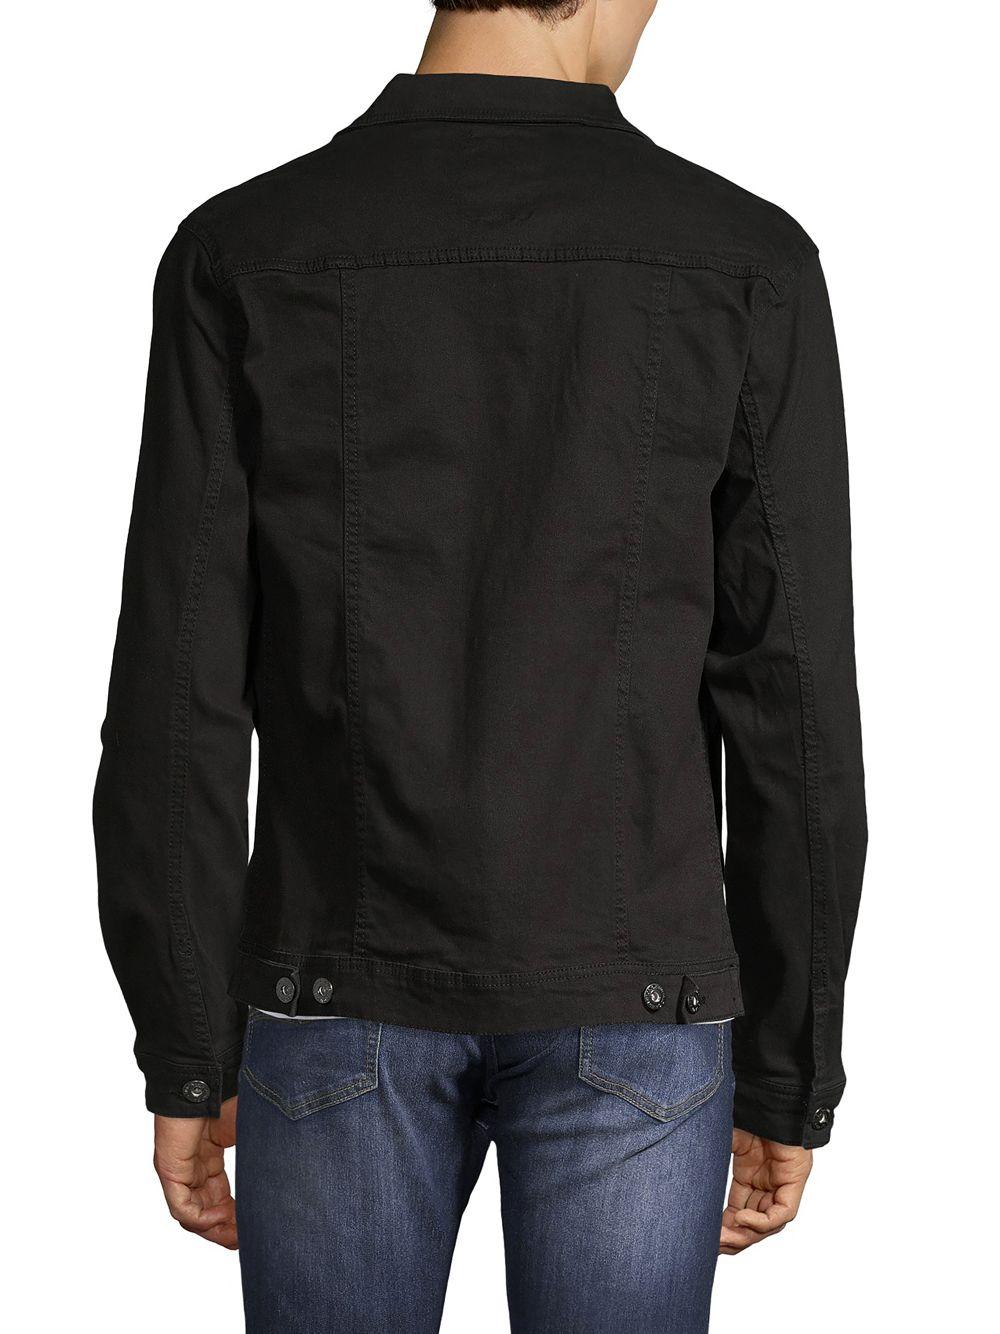 Buffalo David Bitton Solid Denim Jacket in Black for Men - Lyst